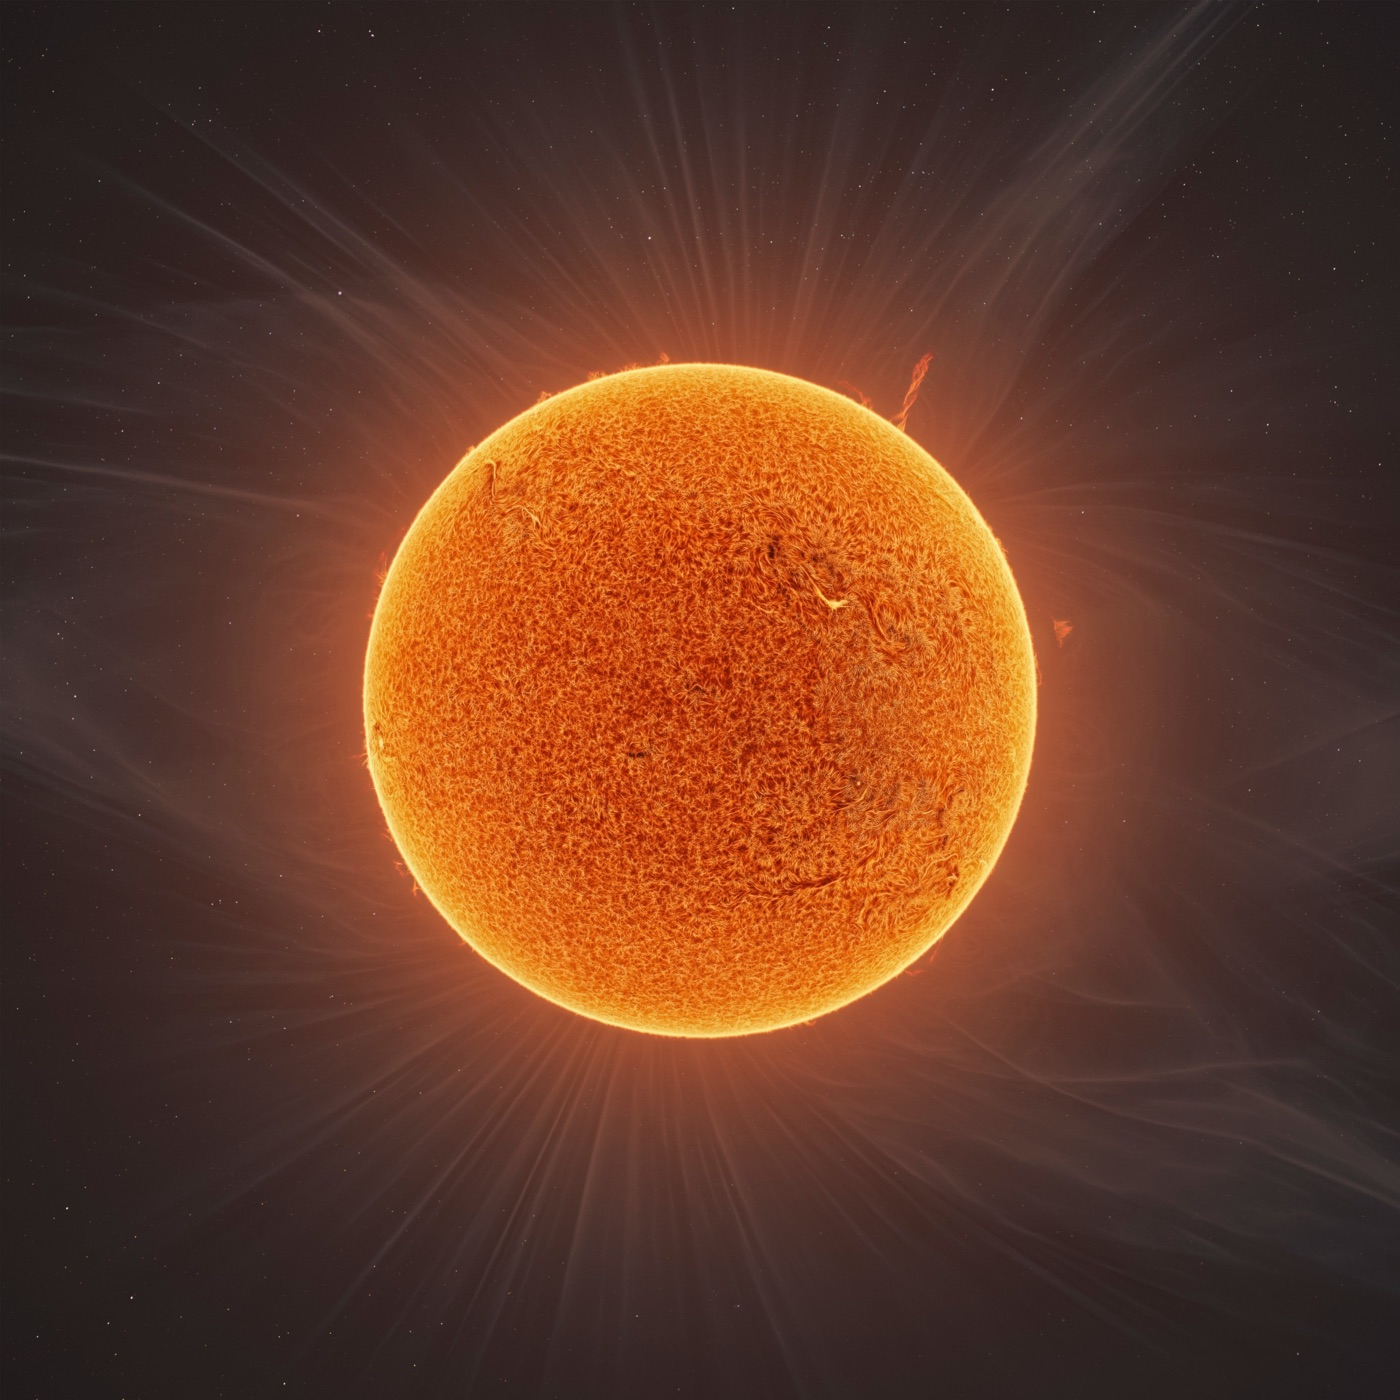 astounding image of the Sun